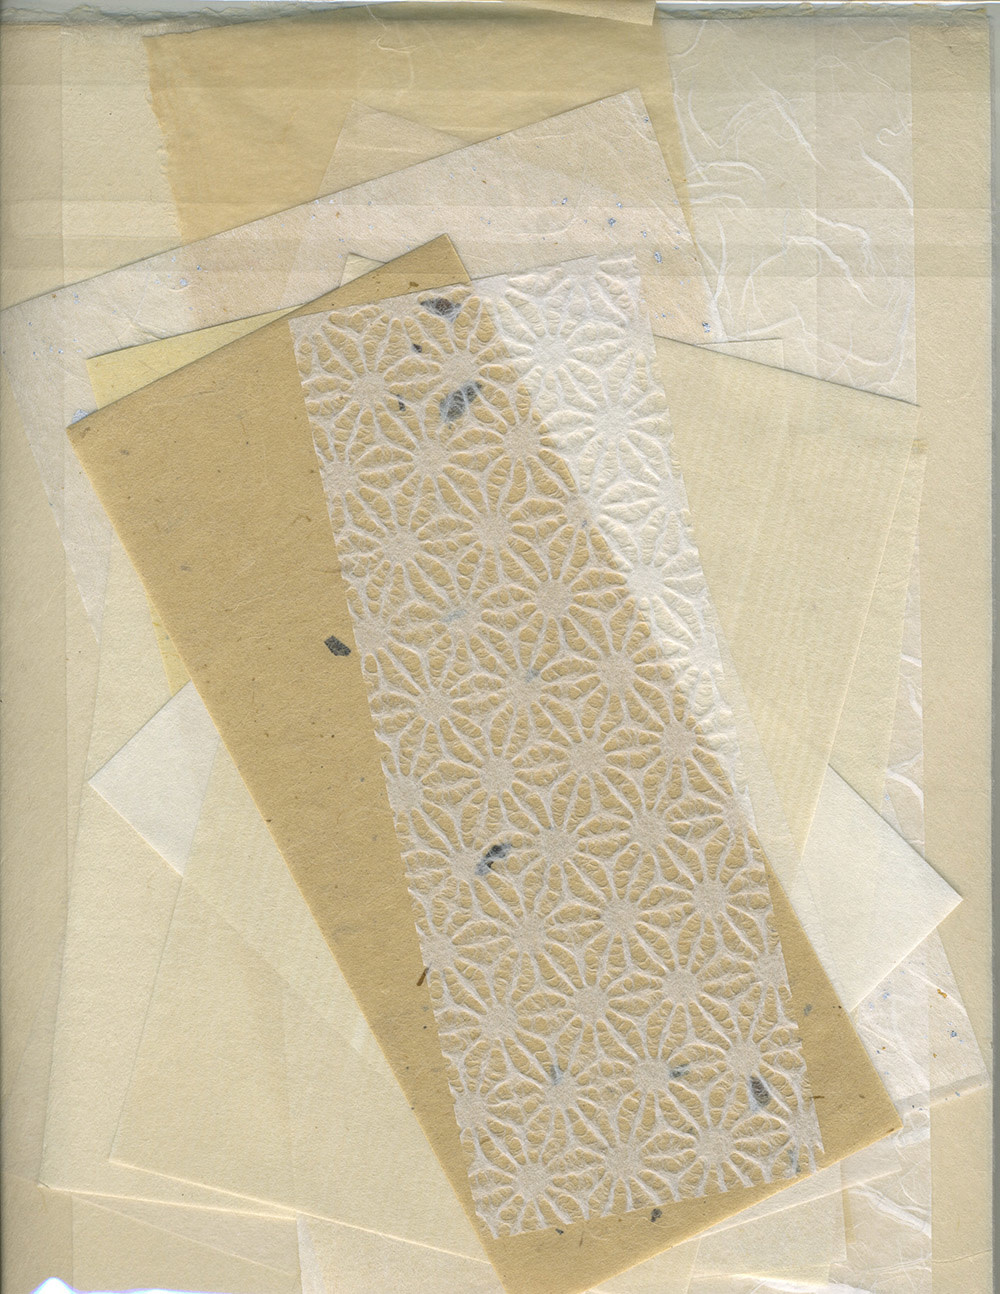 The Japanese Paper Place – Gwartzman's Art Supplies